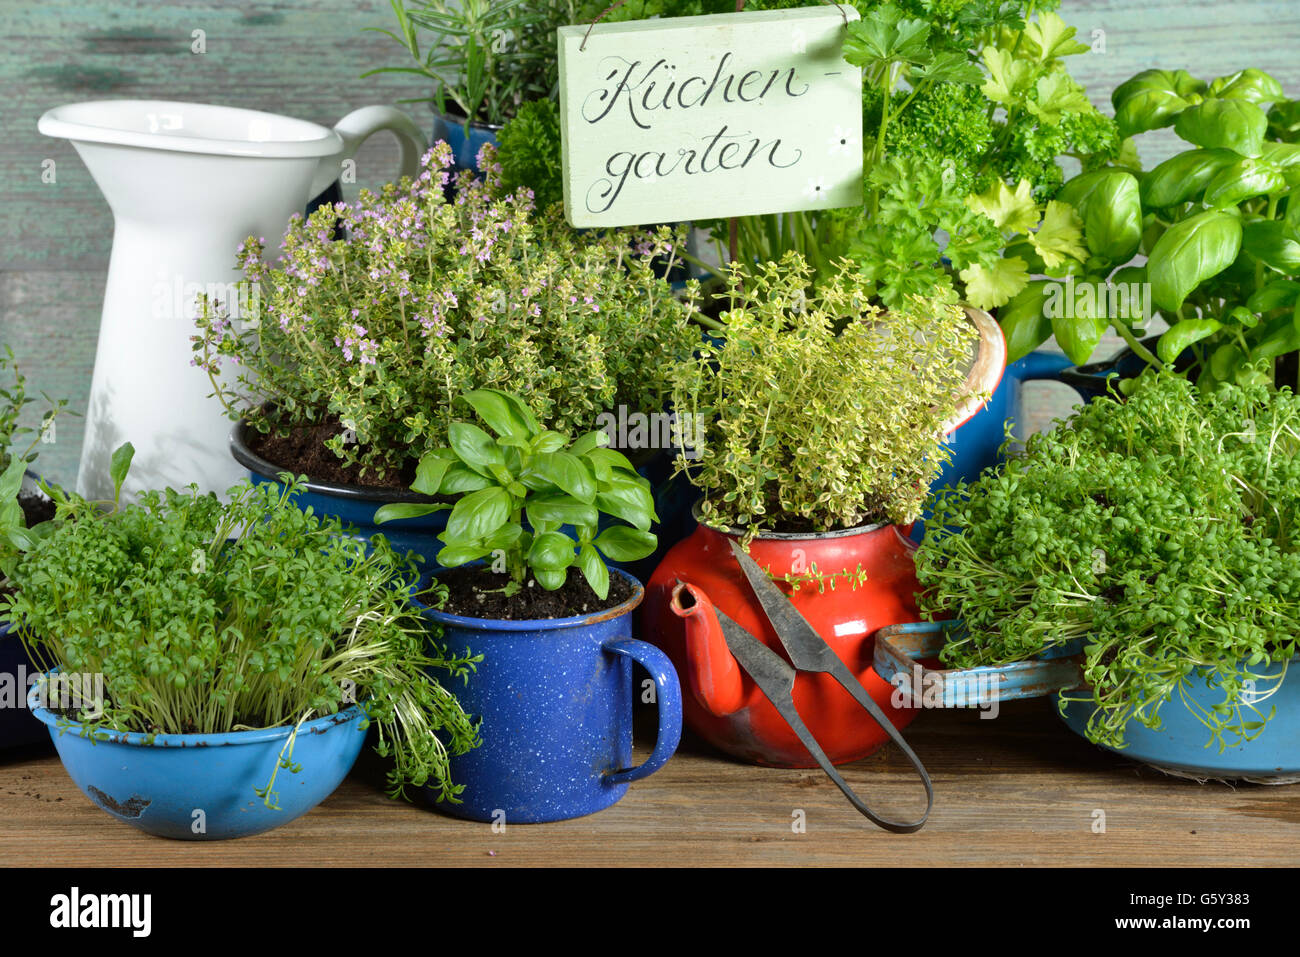 Different herbs in old bowls and cups, parsley, rosemary, basil, thyme, garden cress / (Lepidium sativum), (Thymus vulgaris), (Ocimum basilicum), (Petroselinum crispum) Stock Photo